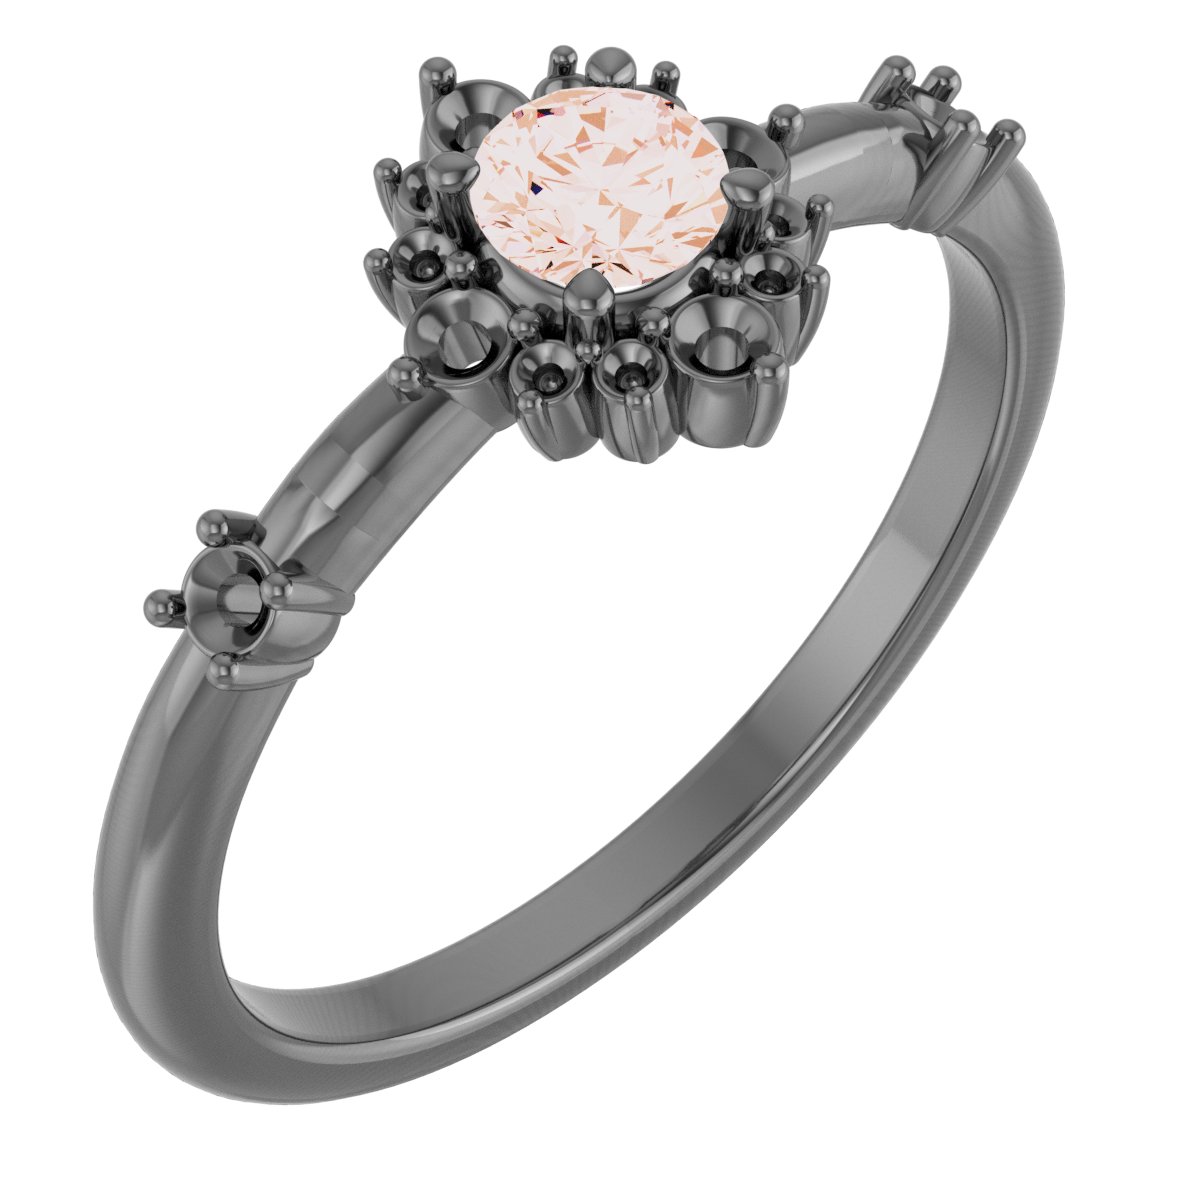 14K Rose Sapphire and .167 CTW Diamond Ring Ref. 15641459